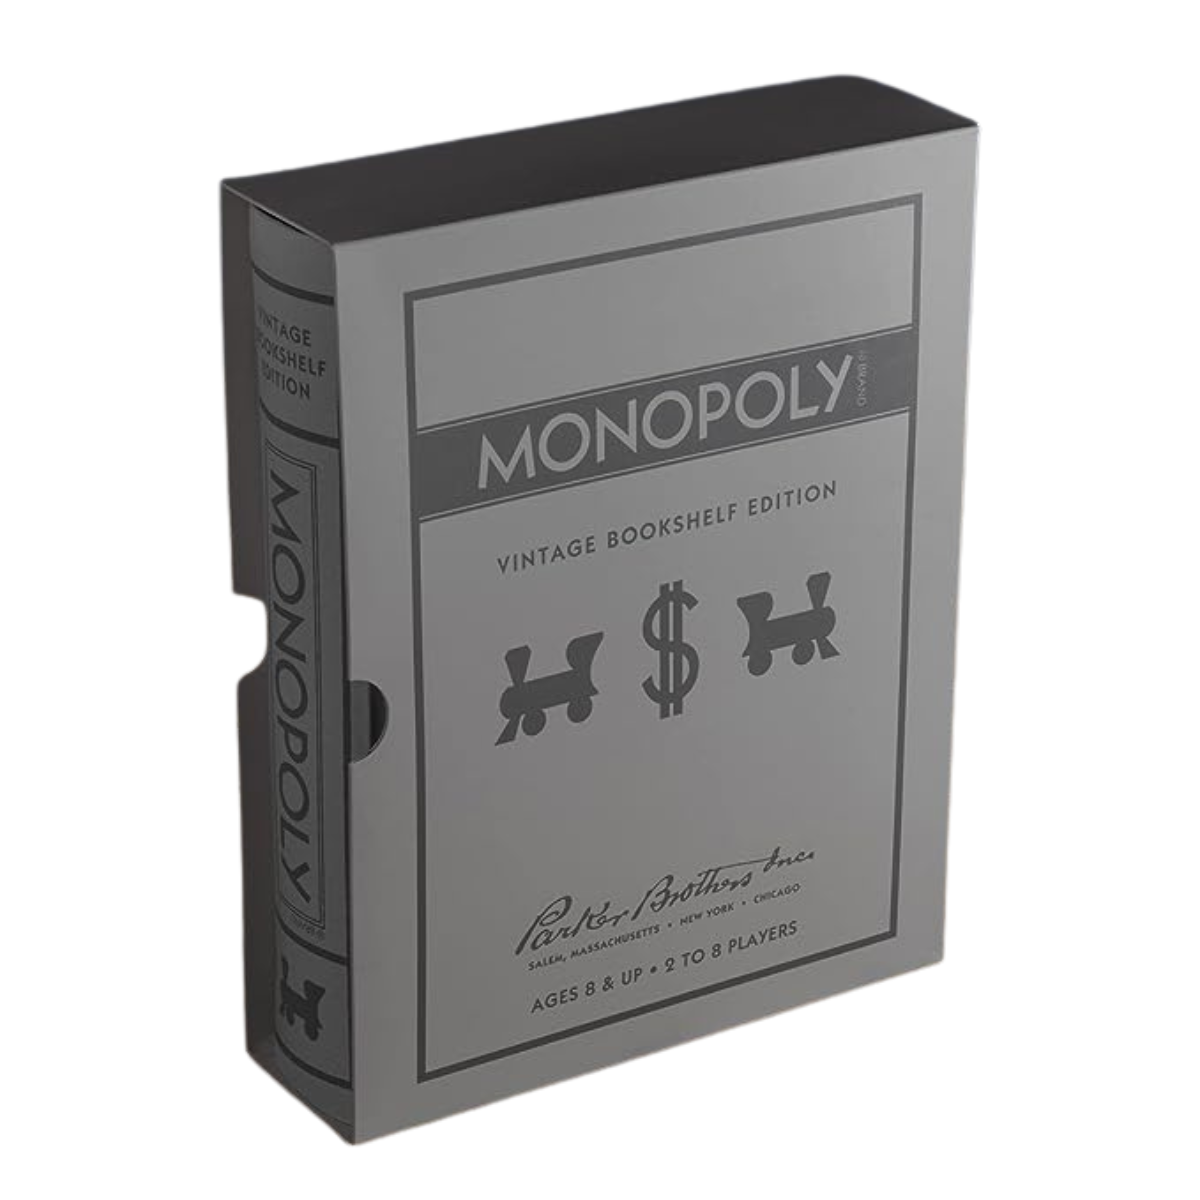 Vintage Bookshelf Edition Game - Monopoly